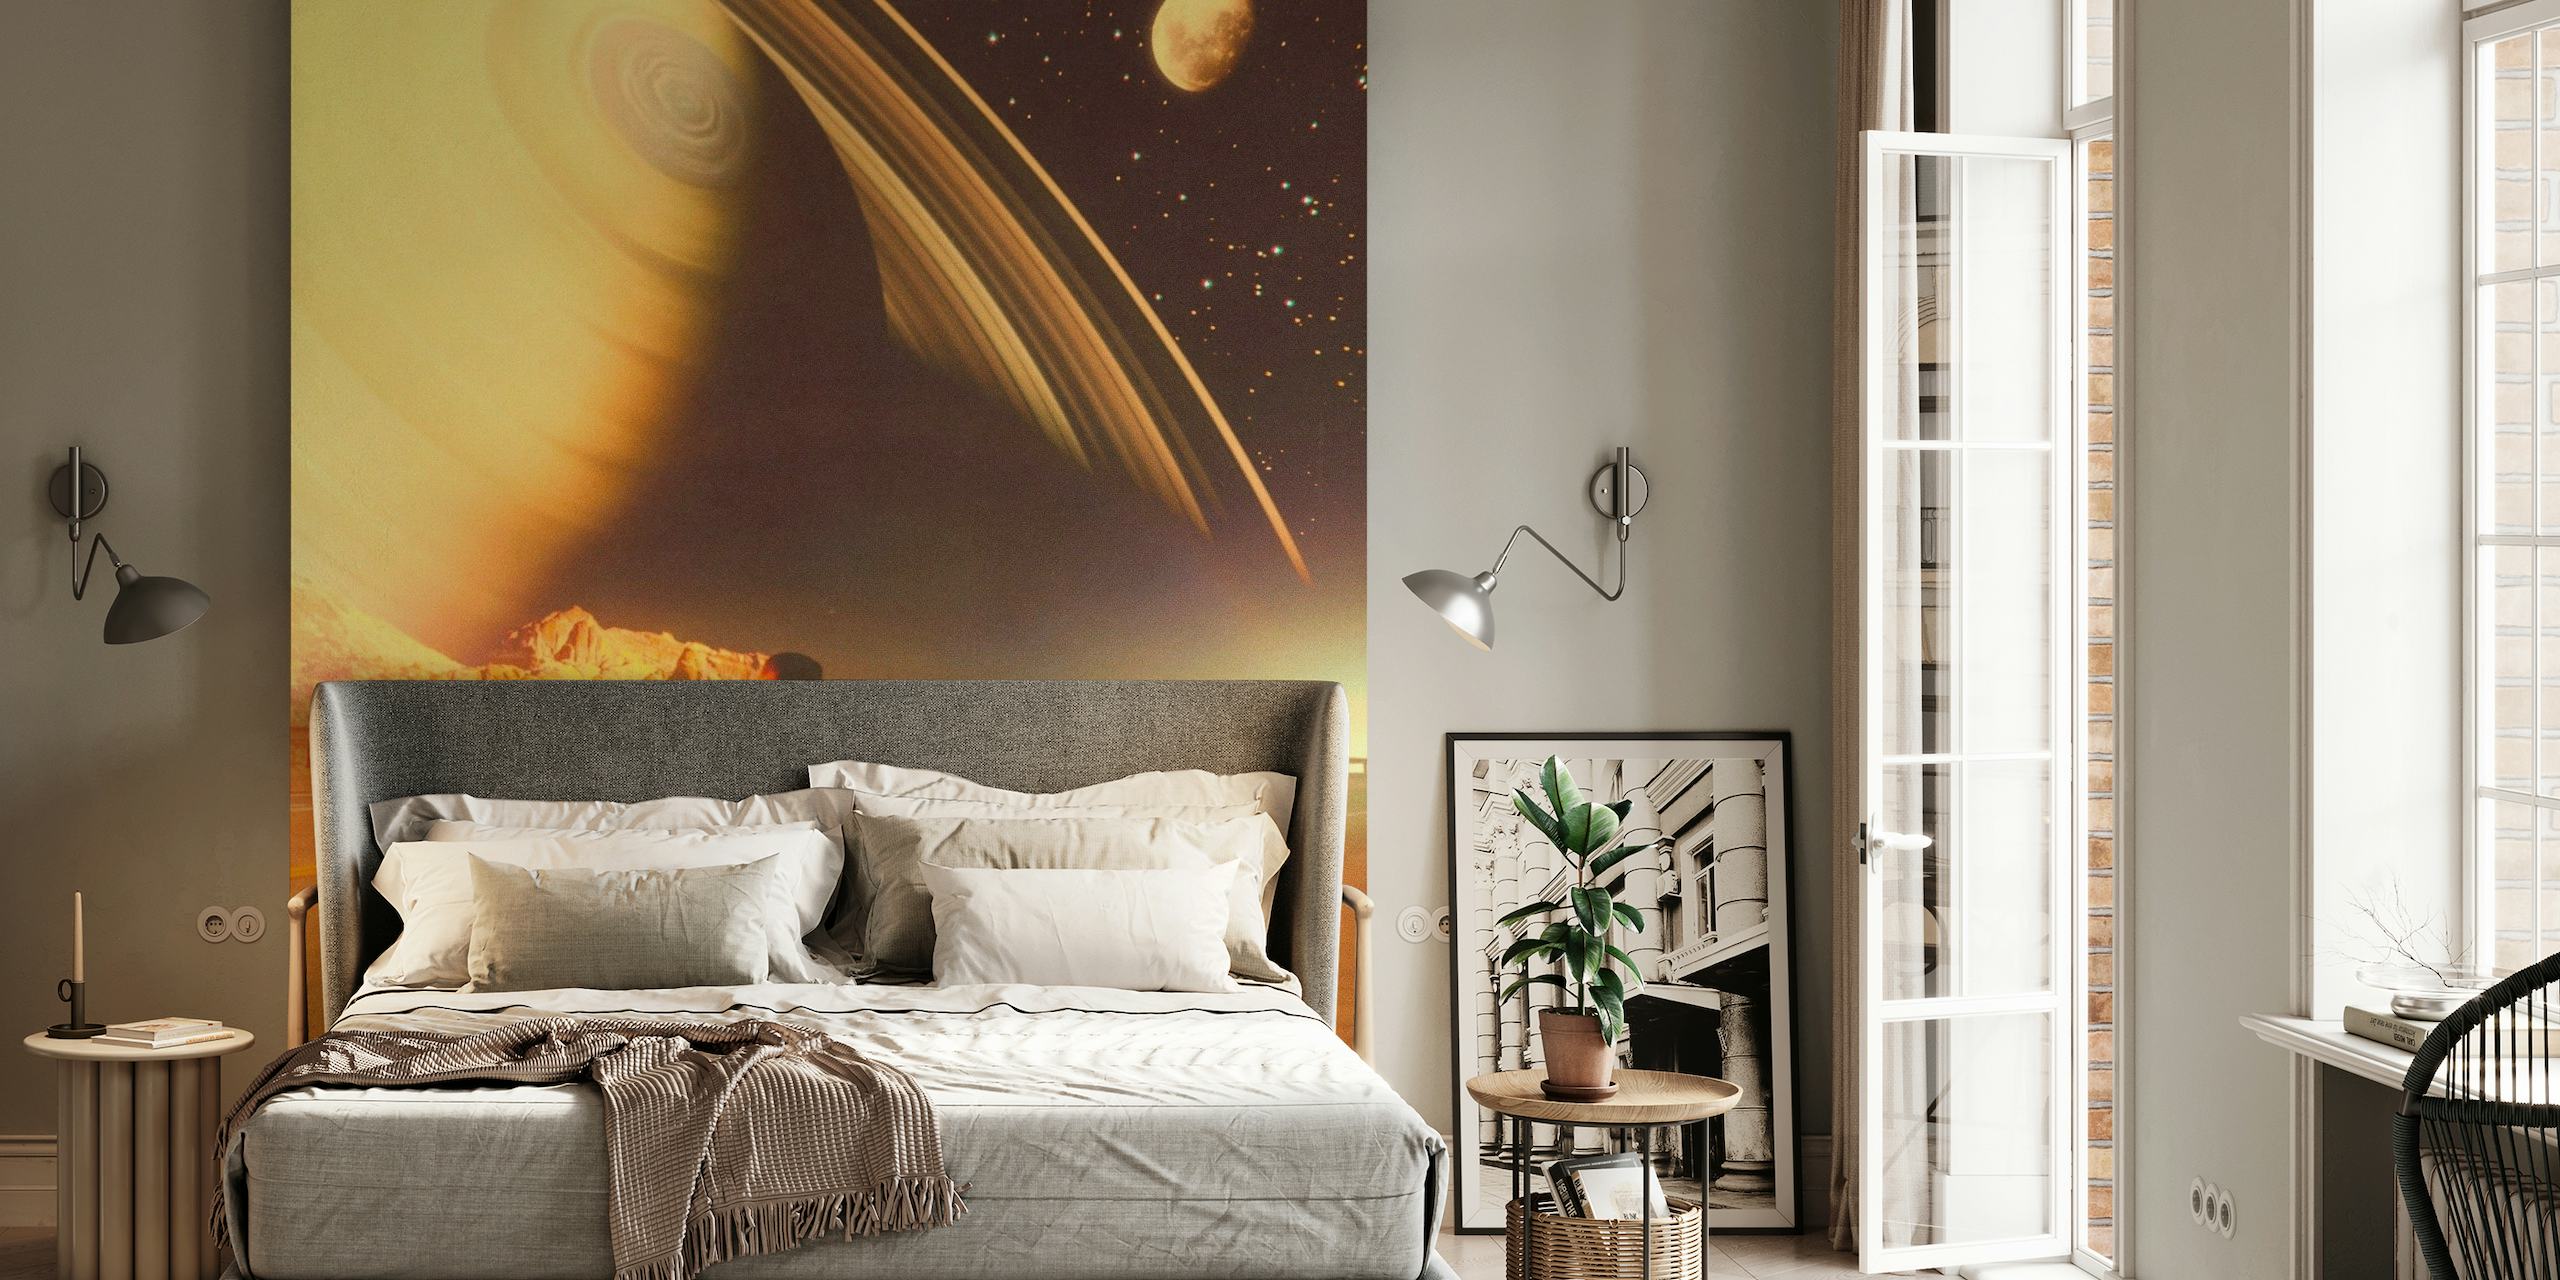 Space Sk8 wallpaper